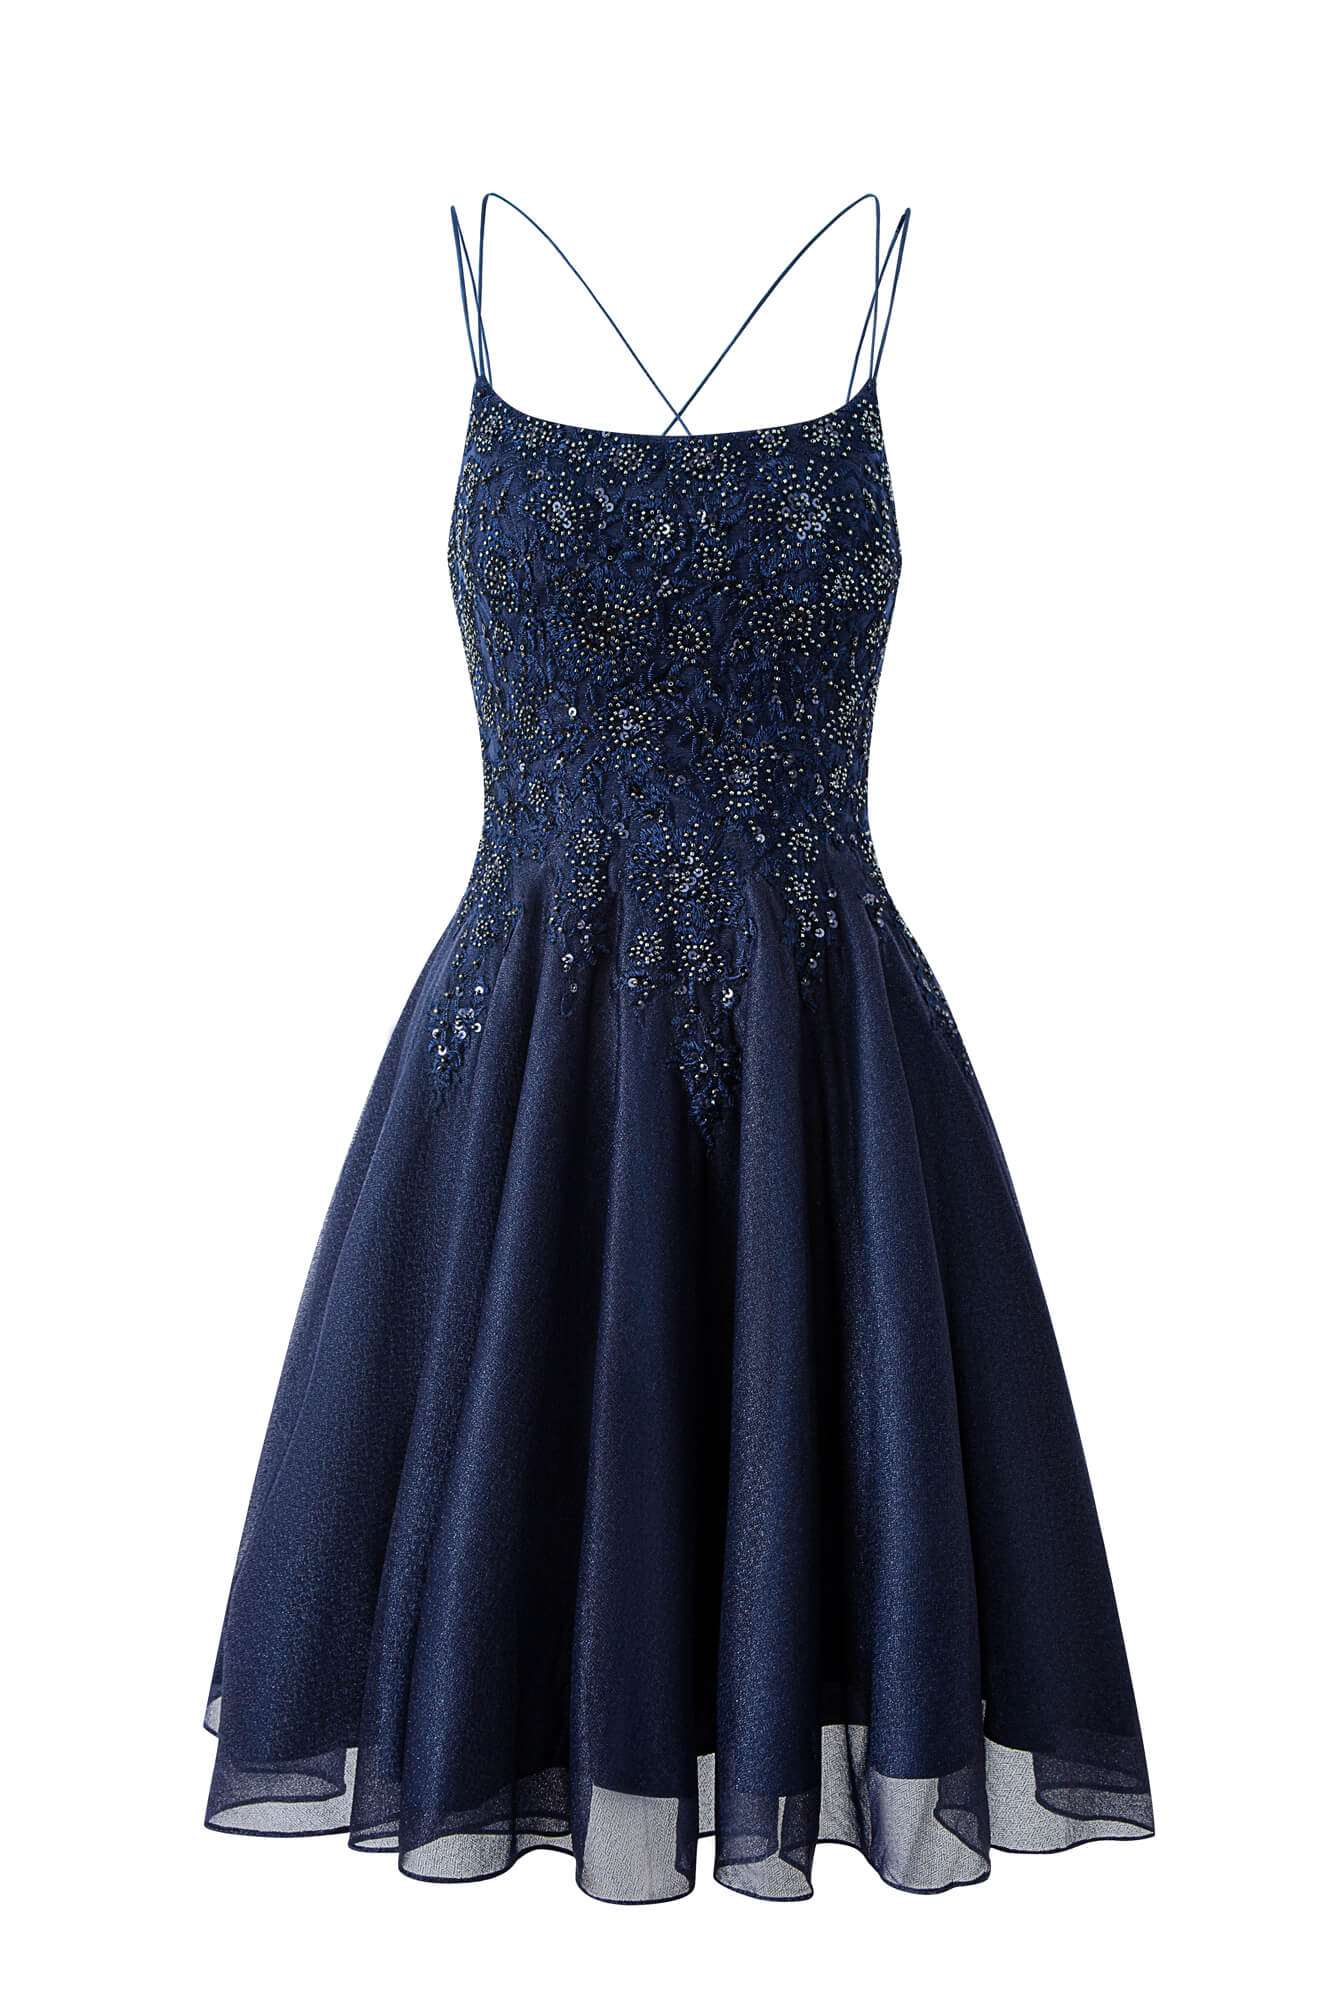 Evelyn Navy Blue | A-line Chiffon Short Homecoming Dress